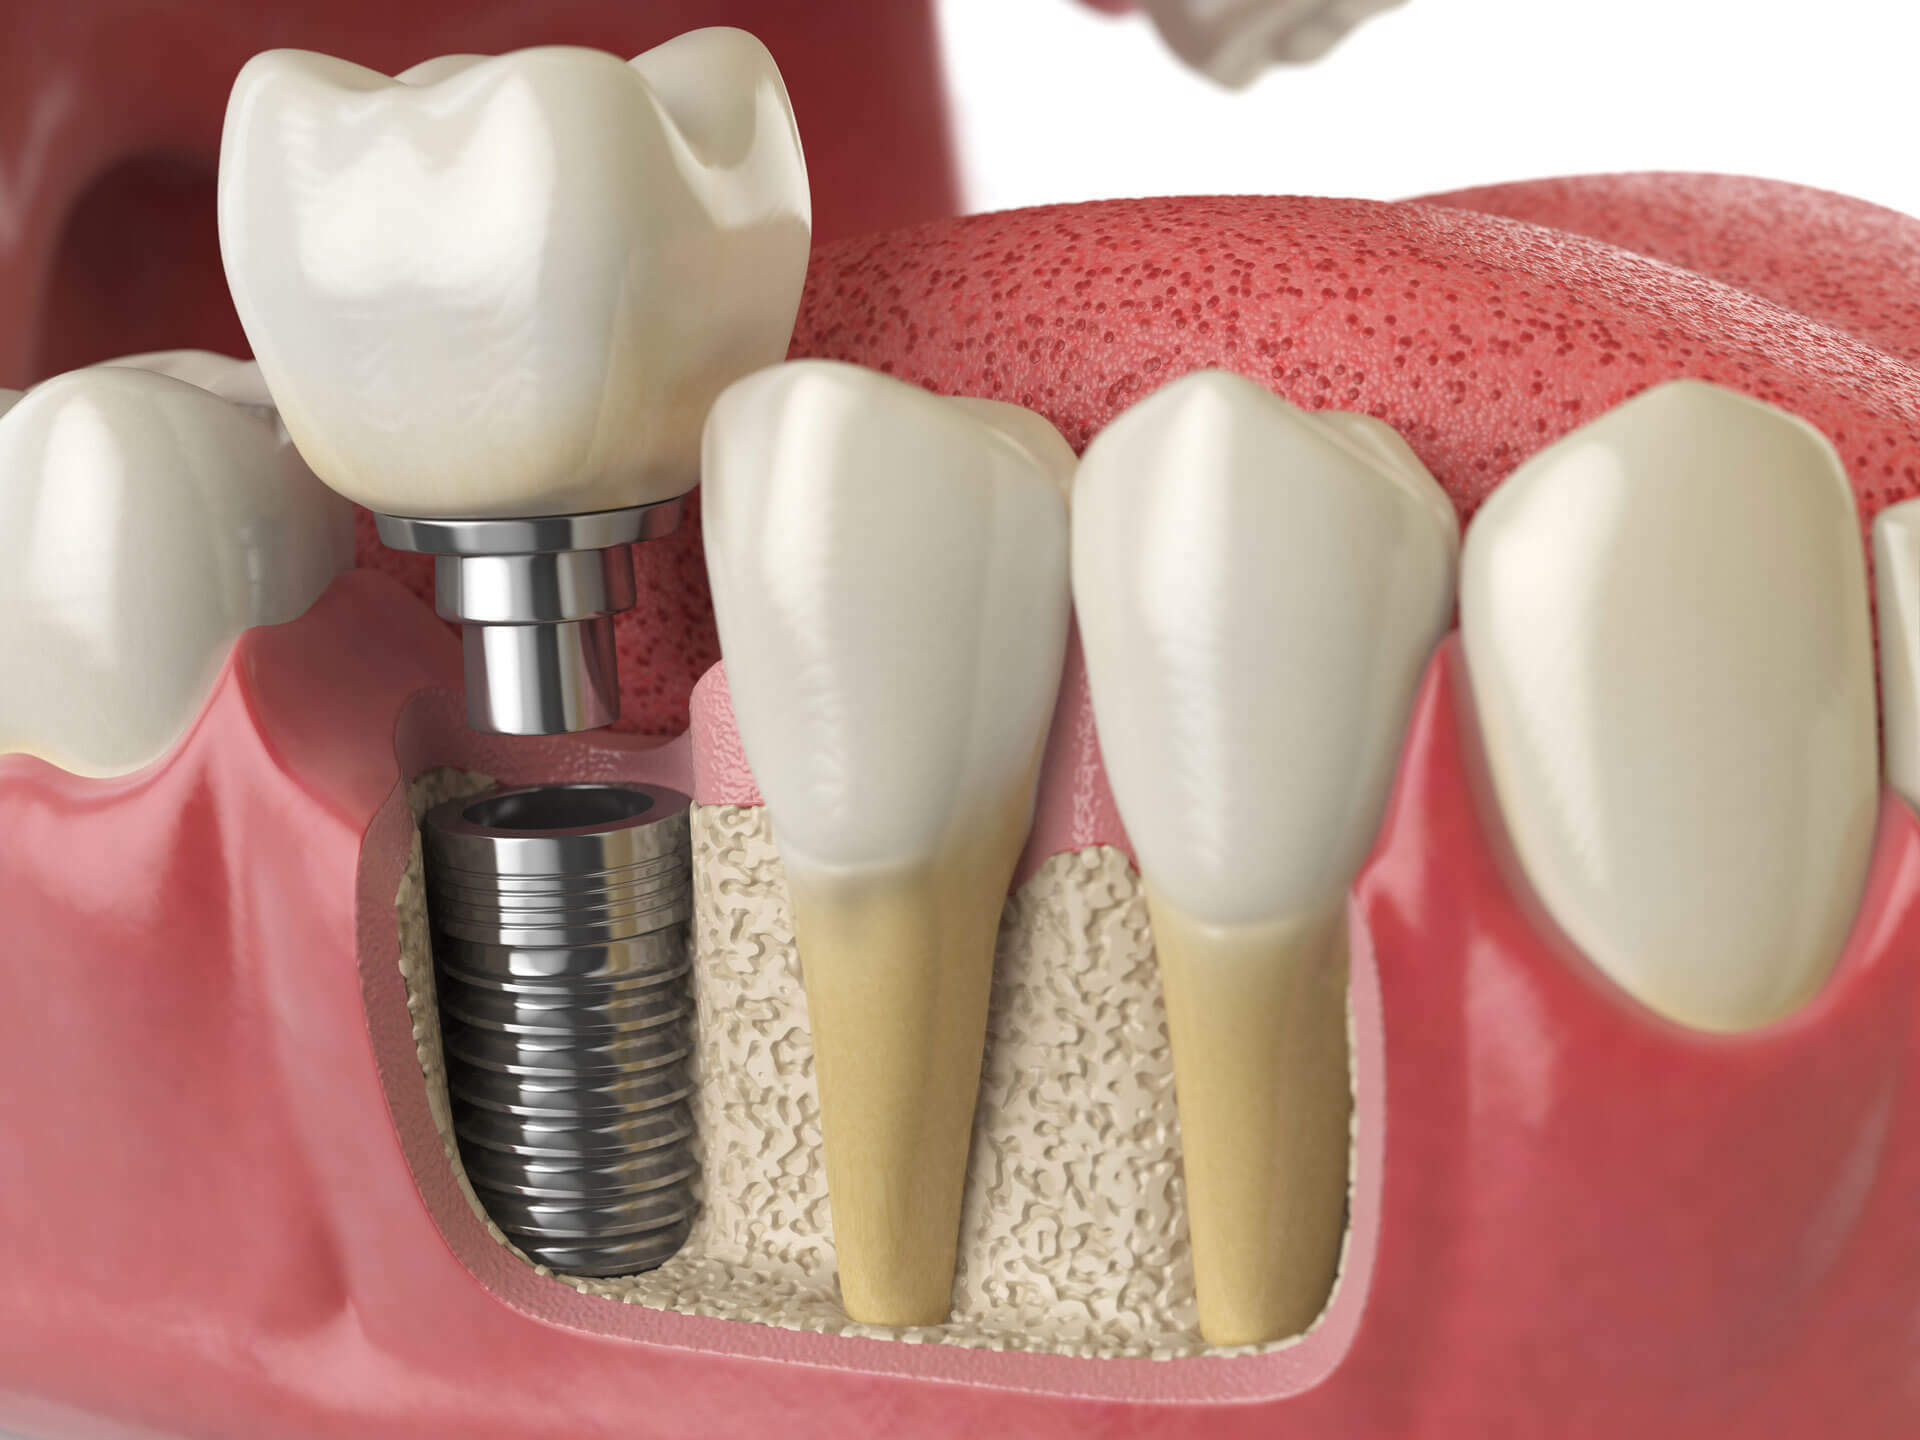 Dr Nikola Bakiš dental corner, dentalni implanti su savršena estetska i funkcionalna nadoknada za izgubljeni zub | stomatologija, zdravlje i prevencija, magazin